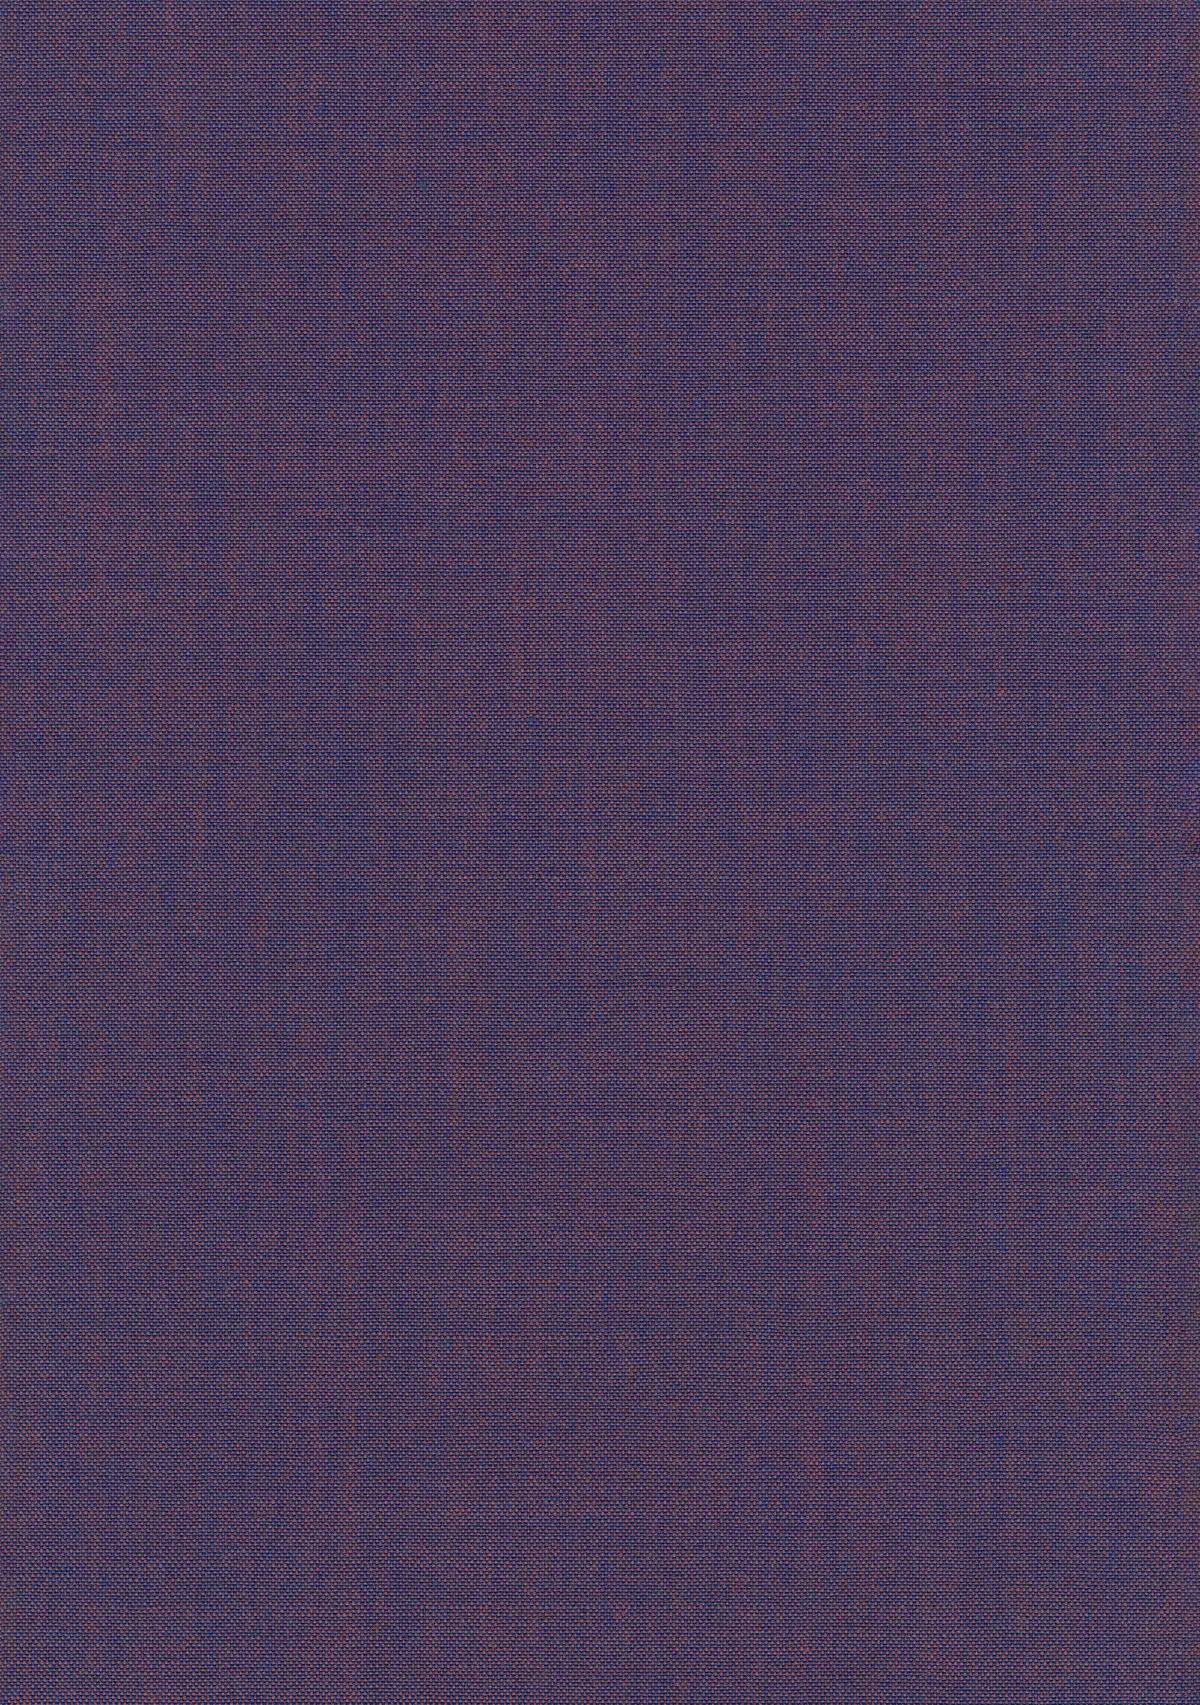 Fabric sample Remix 3 686 purple